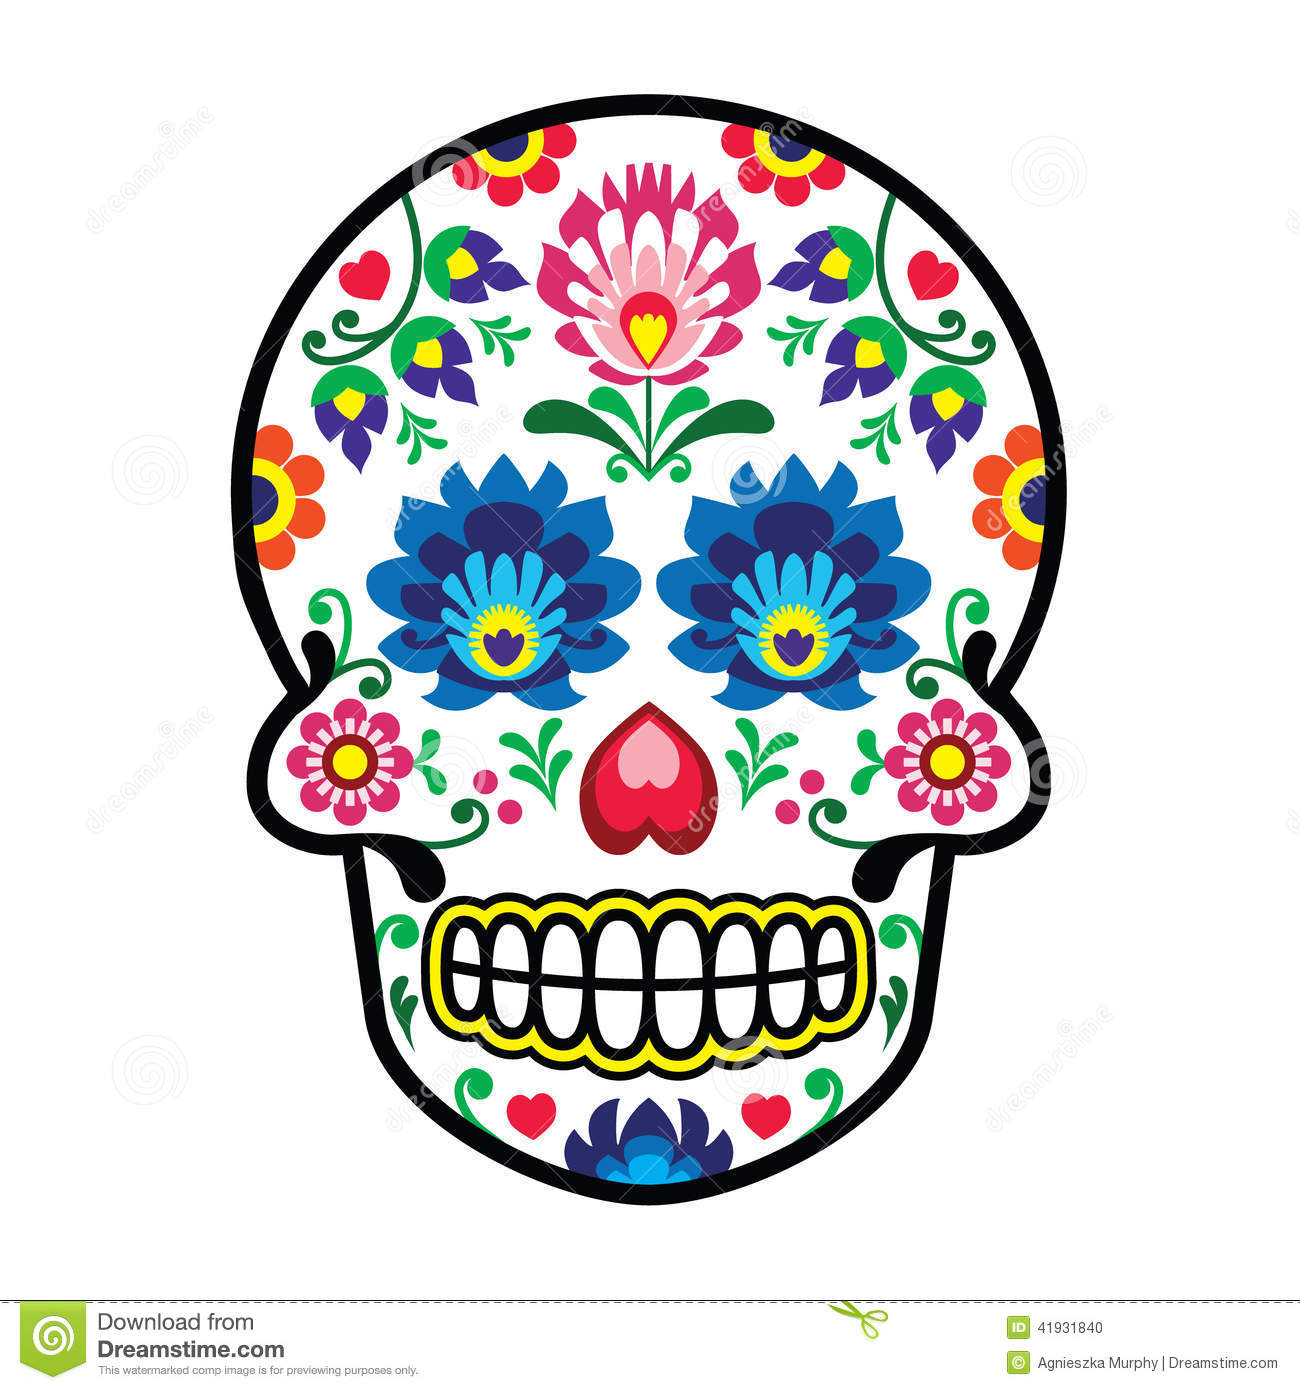 Mexican Sugar Skull   Polish Folk Art Style   Wzory Lowickie